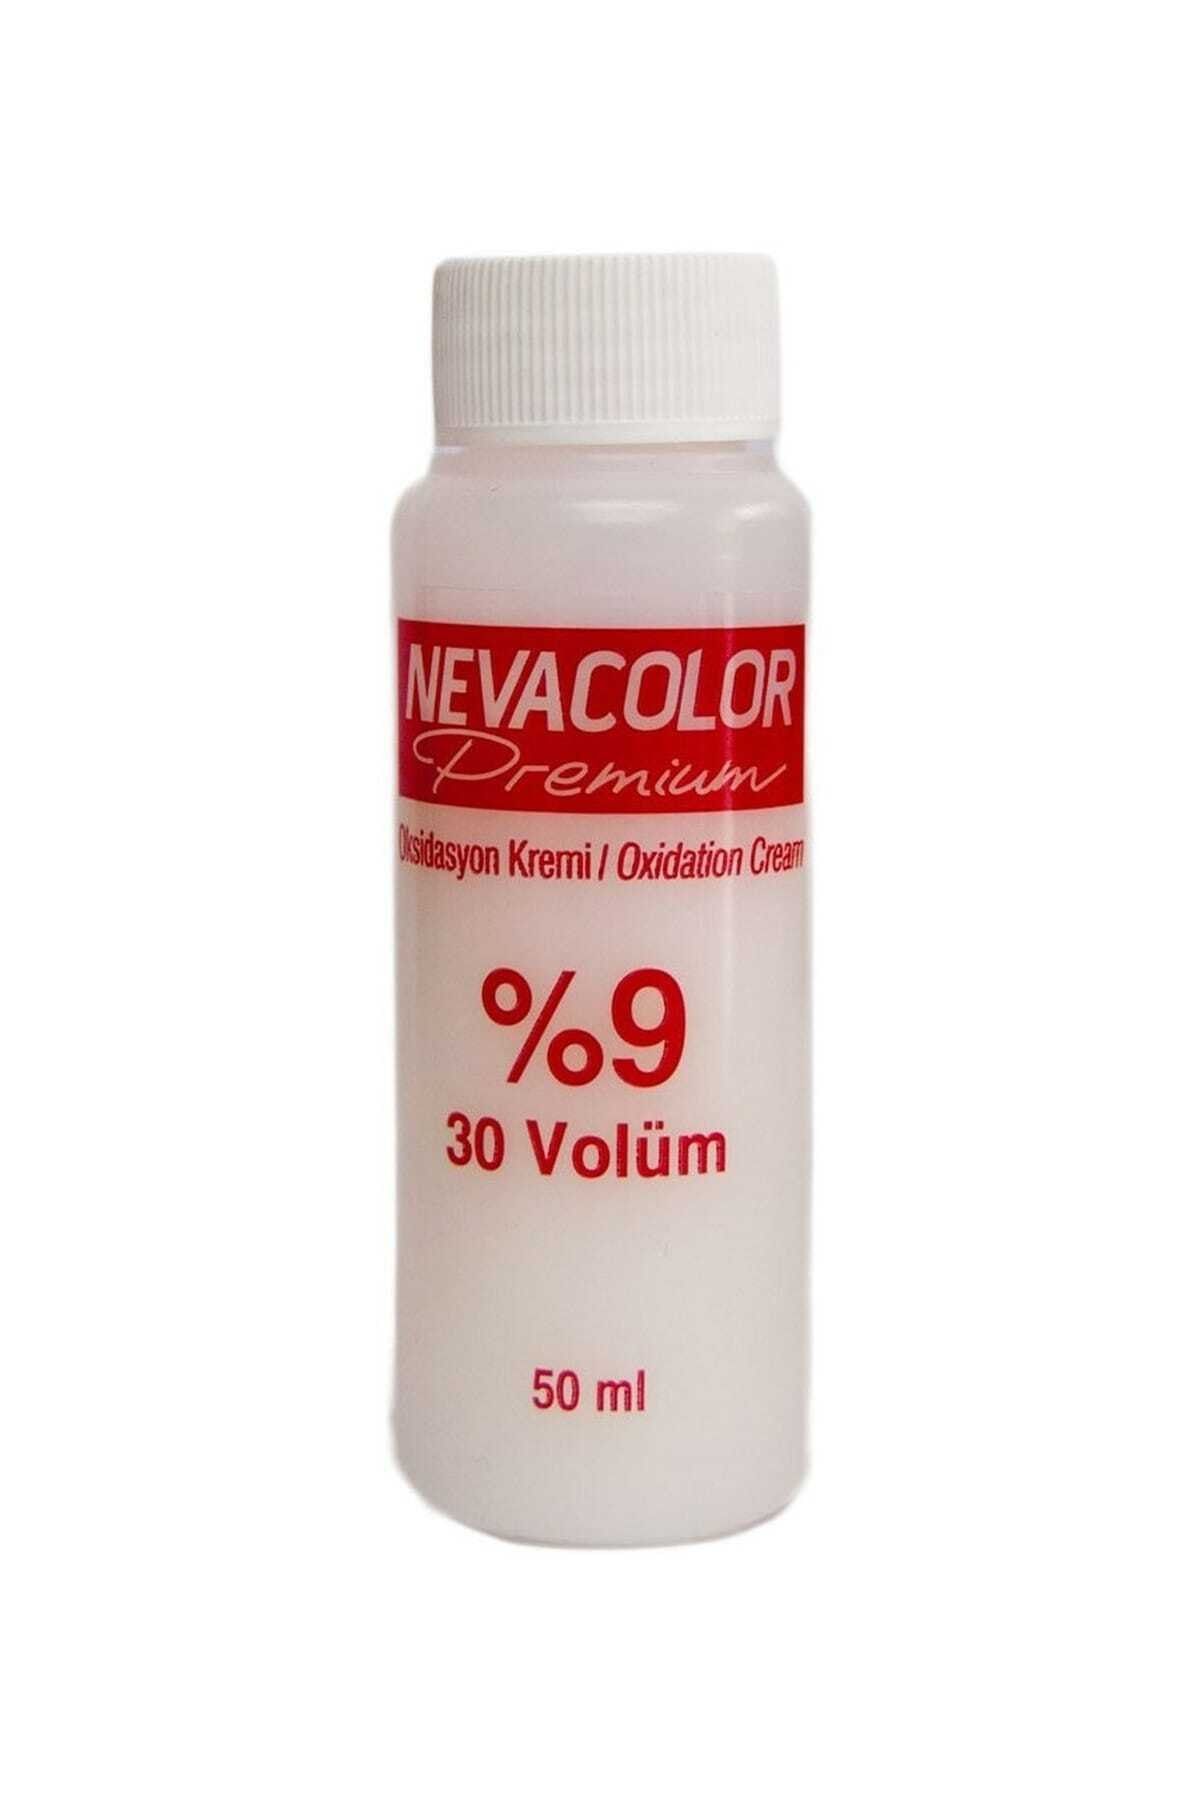 Neva Color Premium Oksidasyon Kremi 30 Volume %9 50 ml